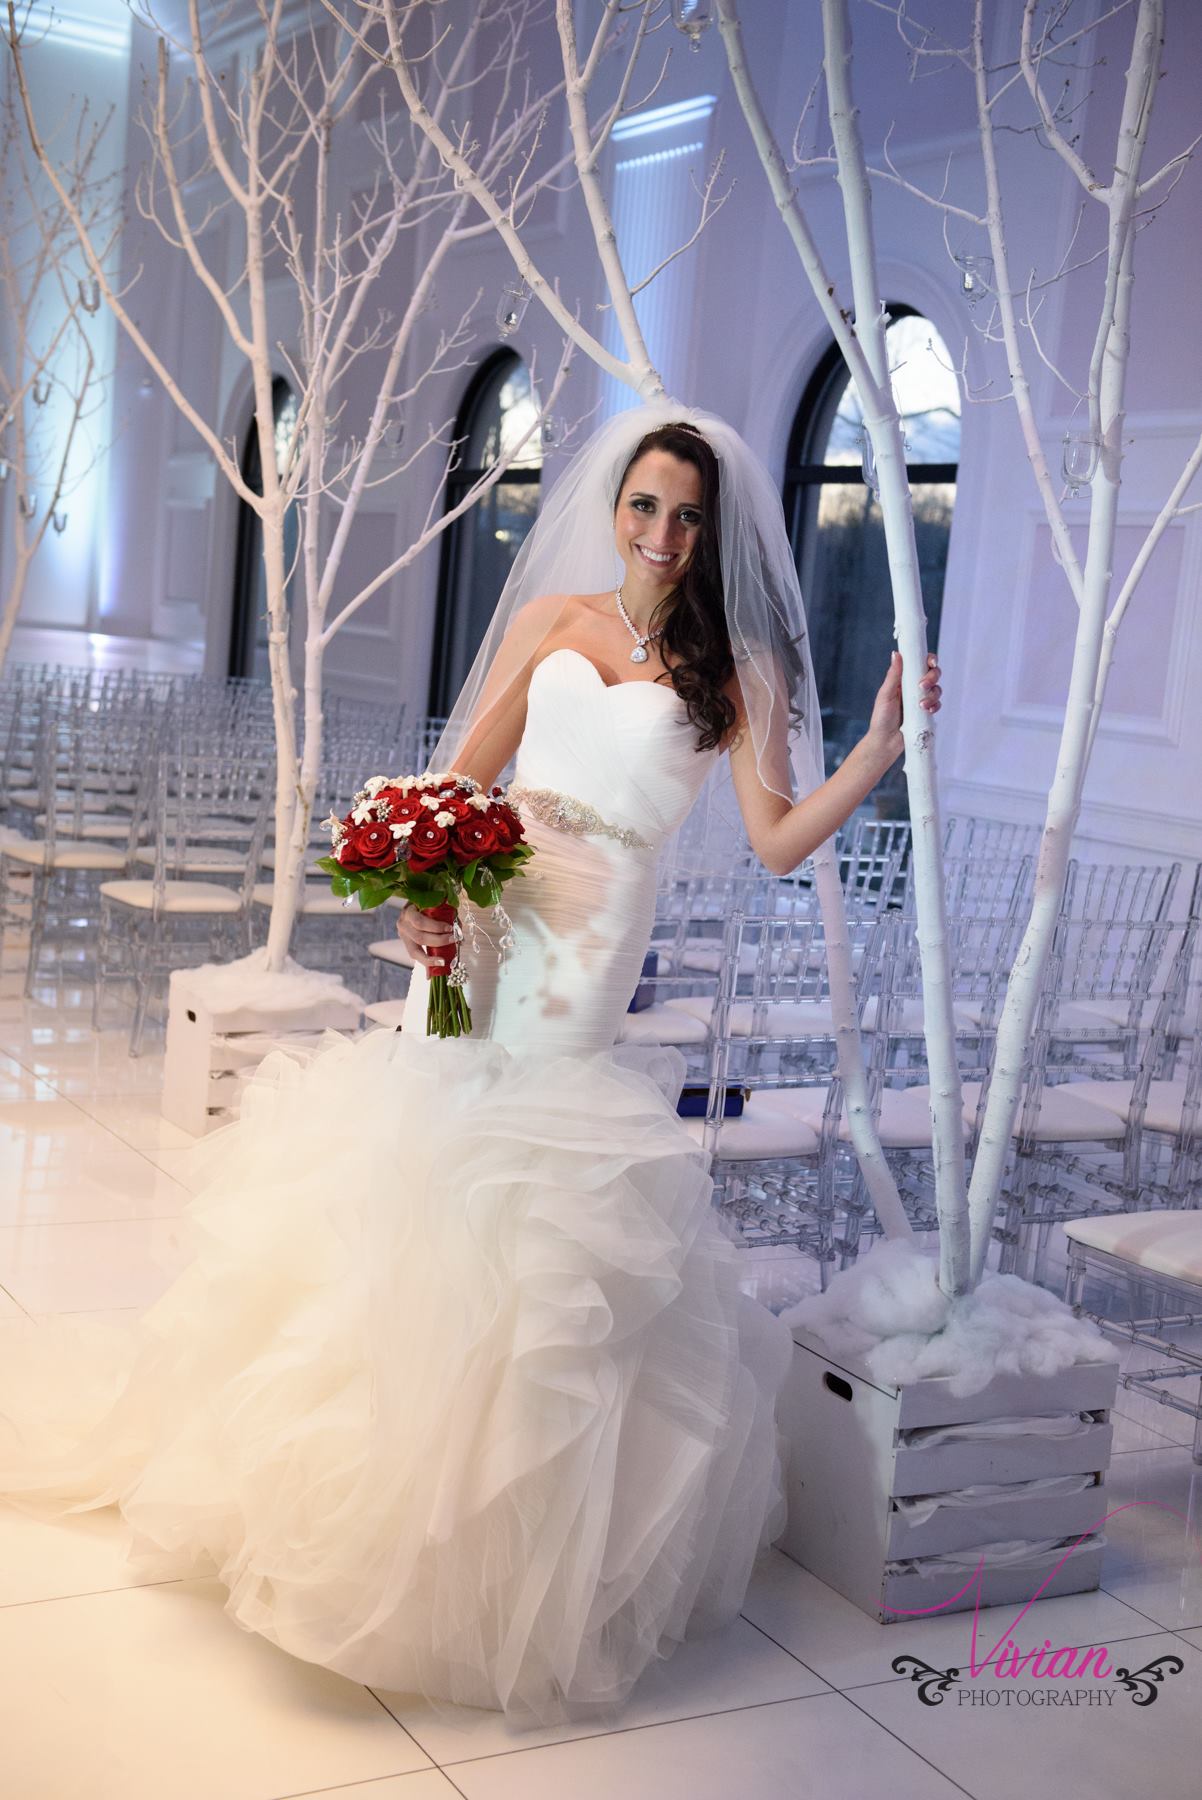 bride-posing-in-winter-wonderland-wedding-venue.jpg